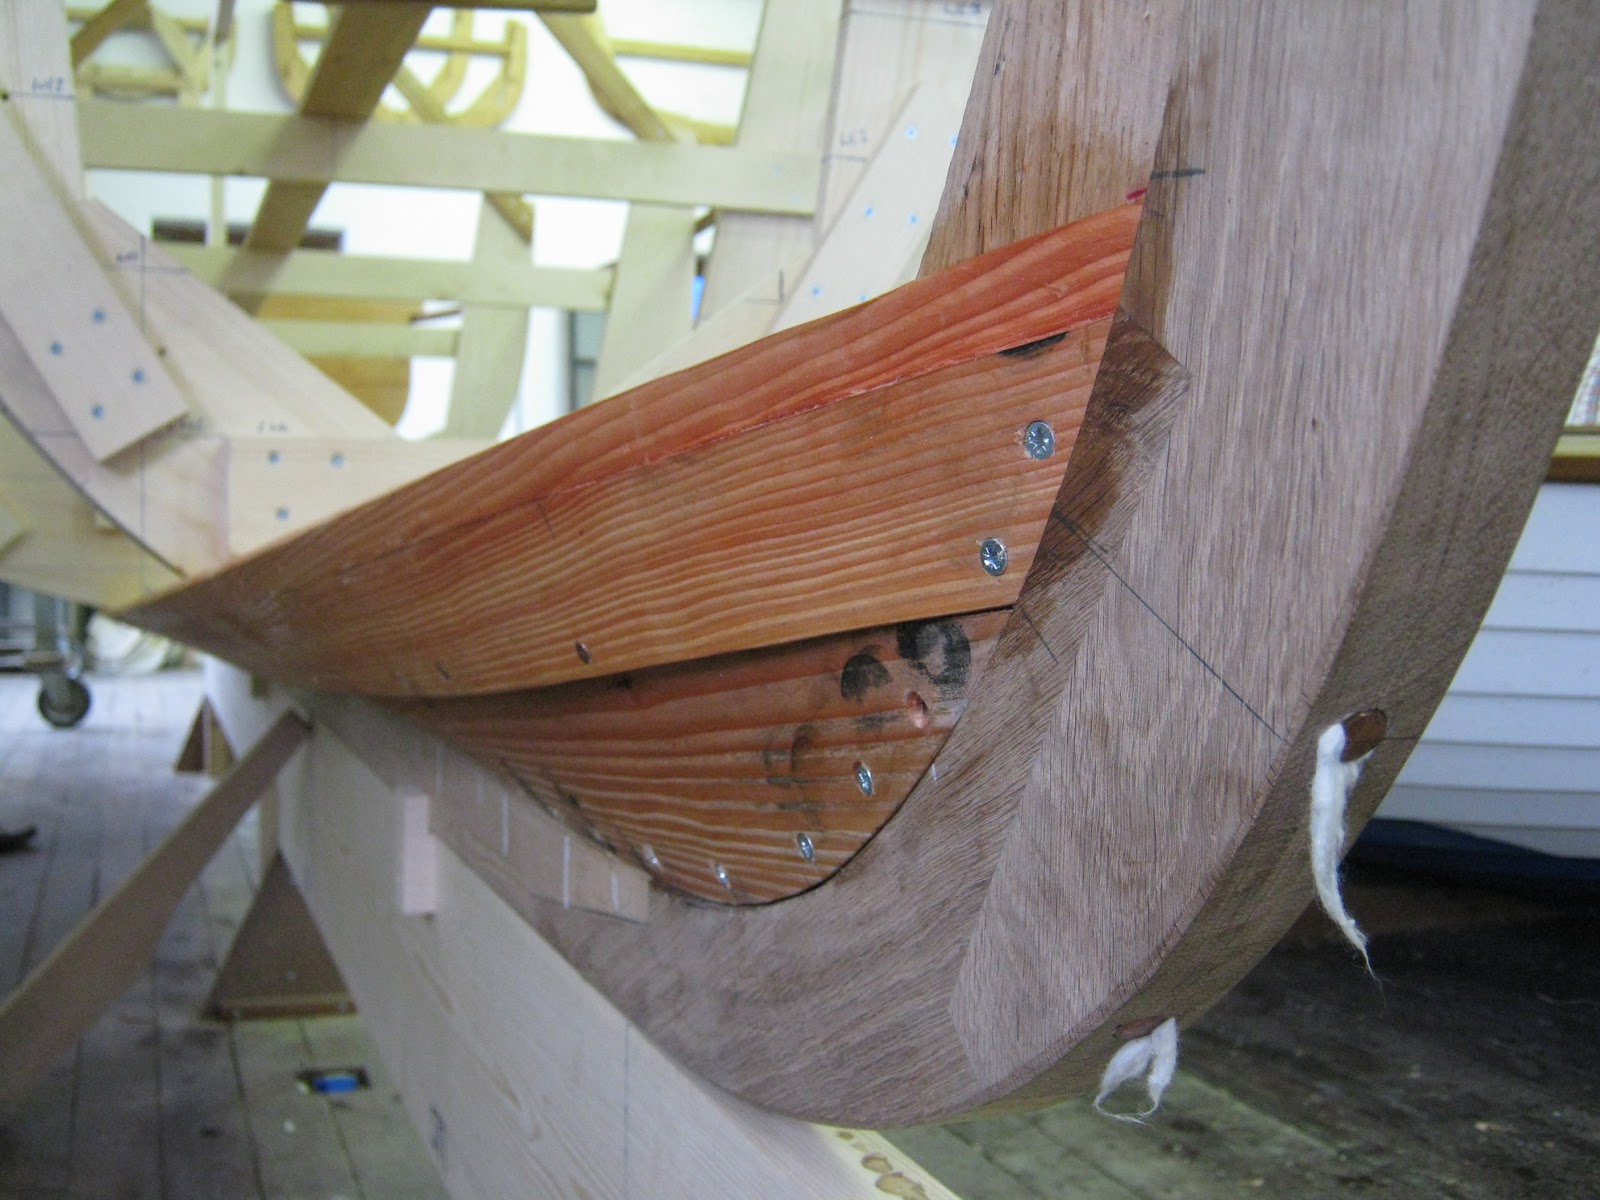 Traditional Boatbuilding Skills